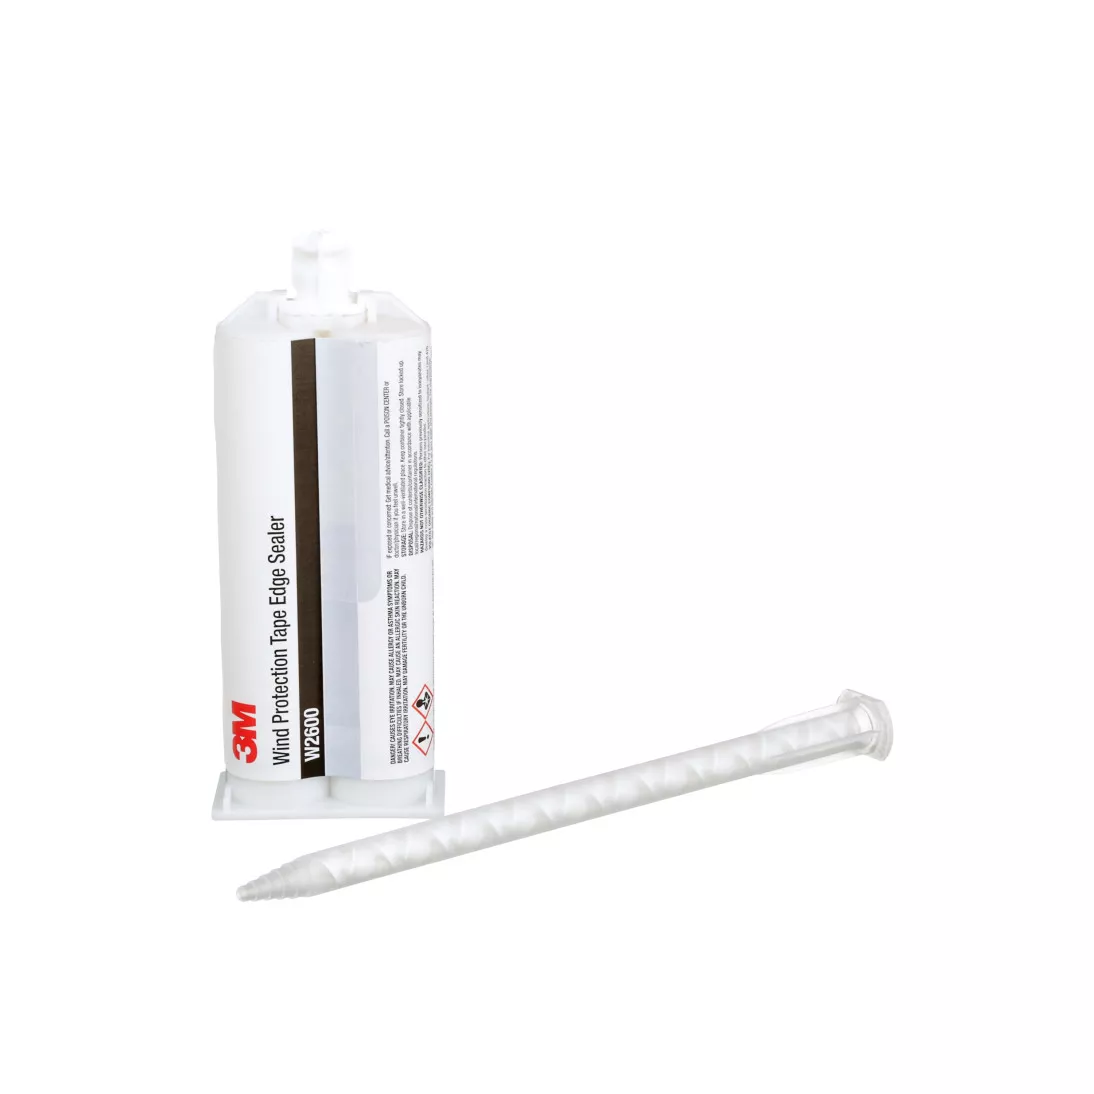 3M™ Wind Protection Tape Edge Sealer W2600, 50 ml (1.7 fluid ounce),
12/Case